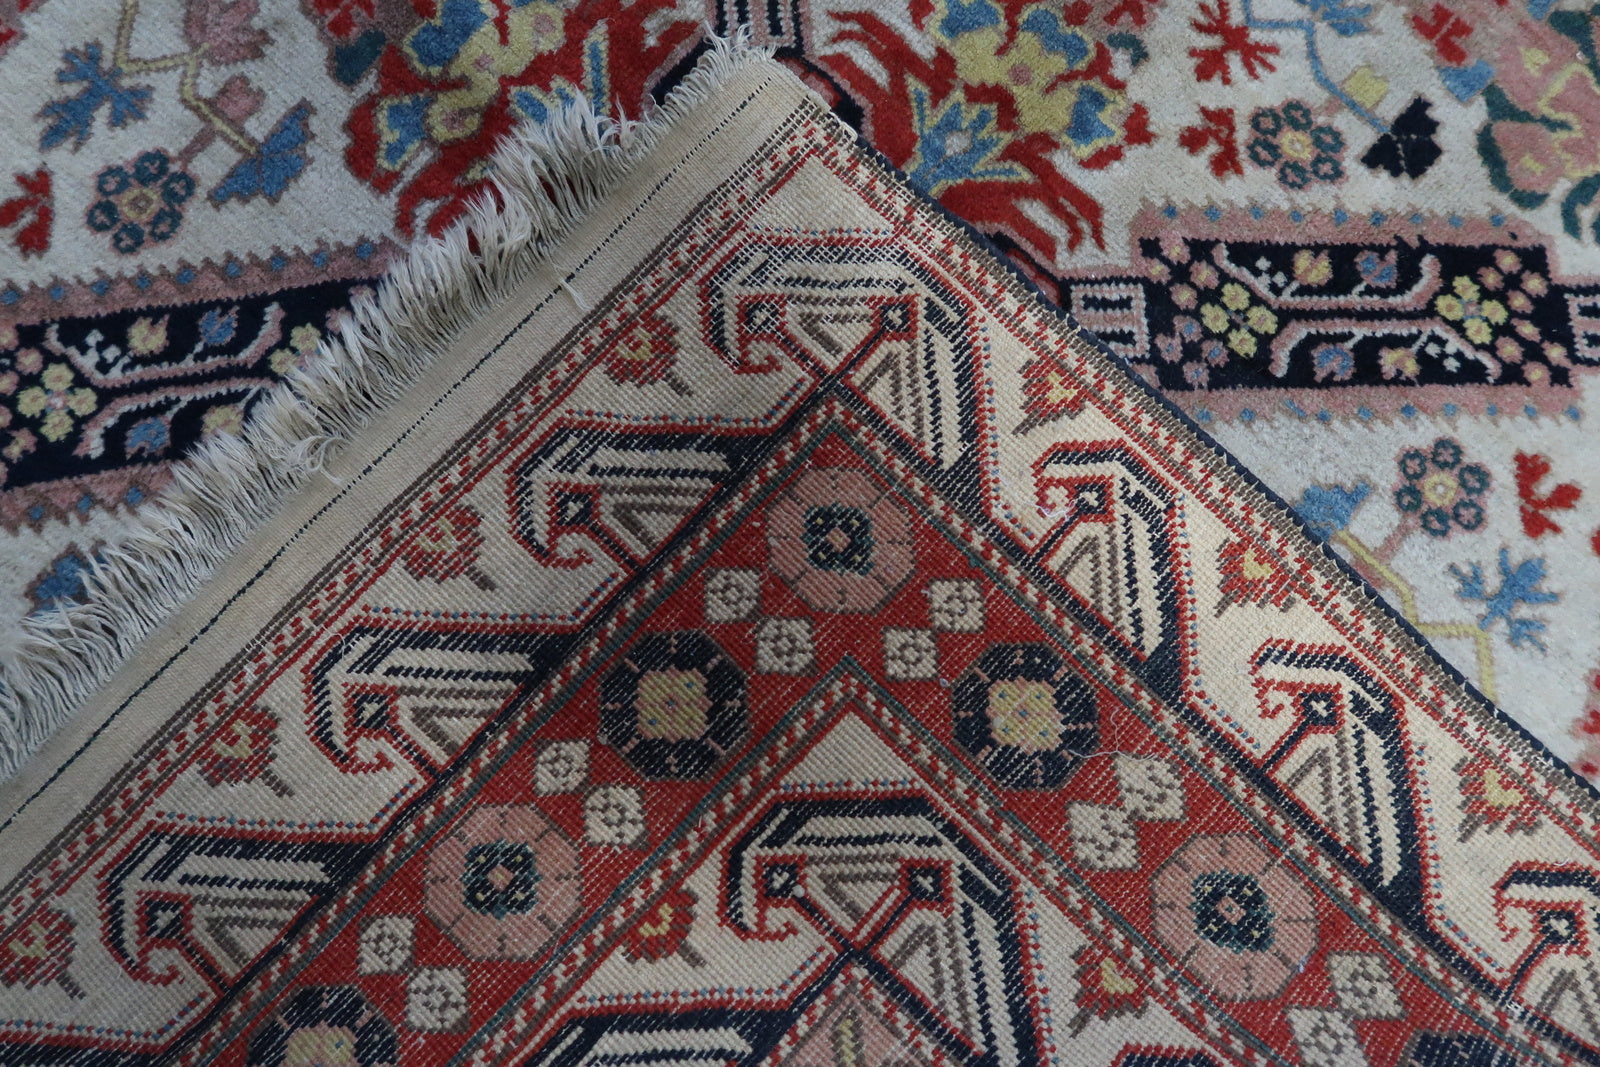 Back side view of handmade vintage Caucasian Zeyhur rug showcasing original craftsmanship